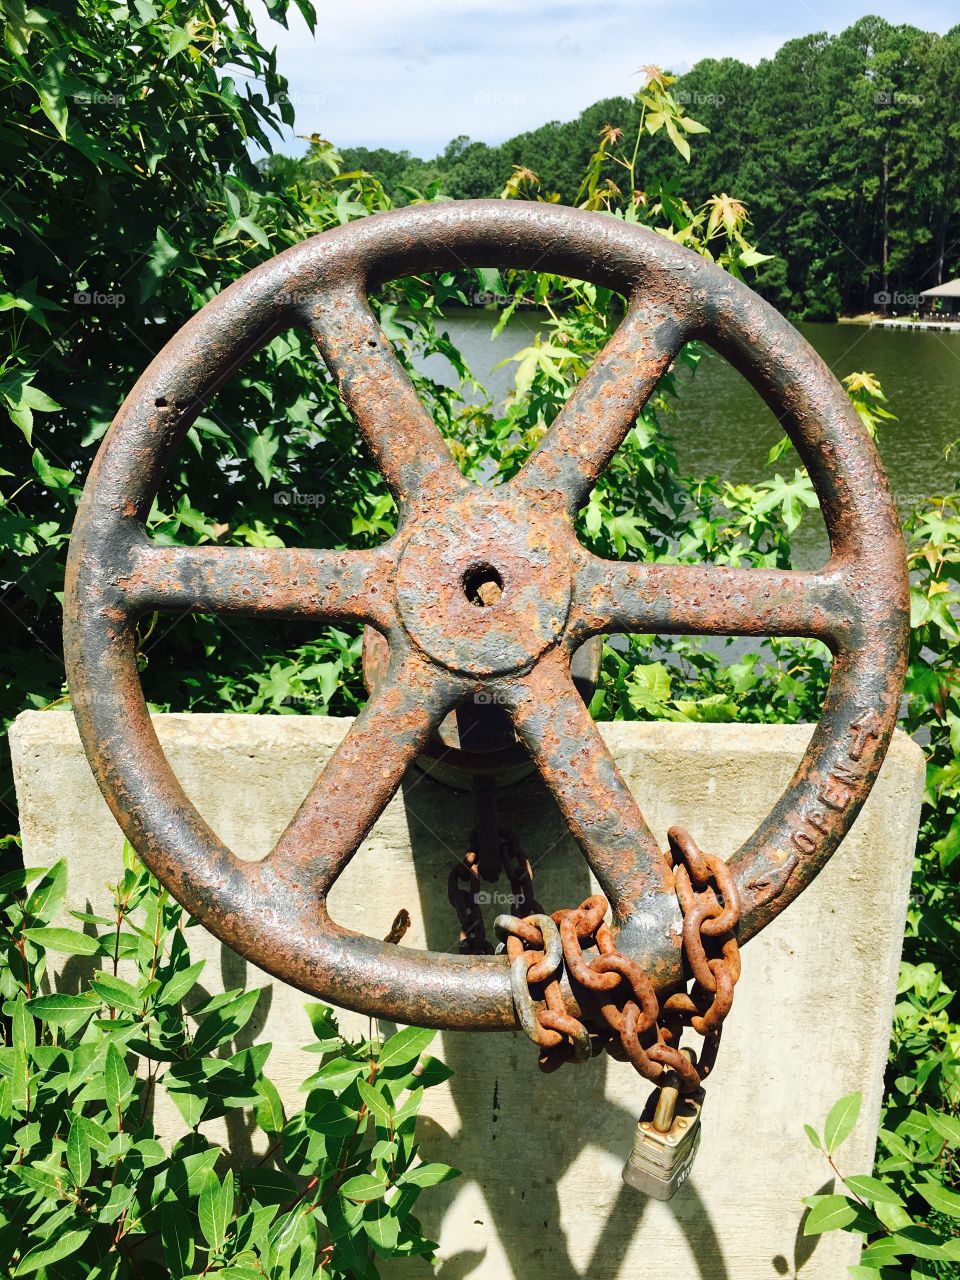 Rustic wheel